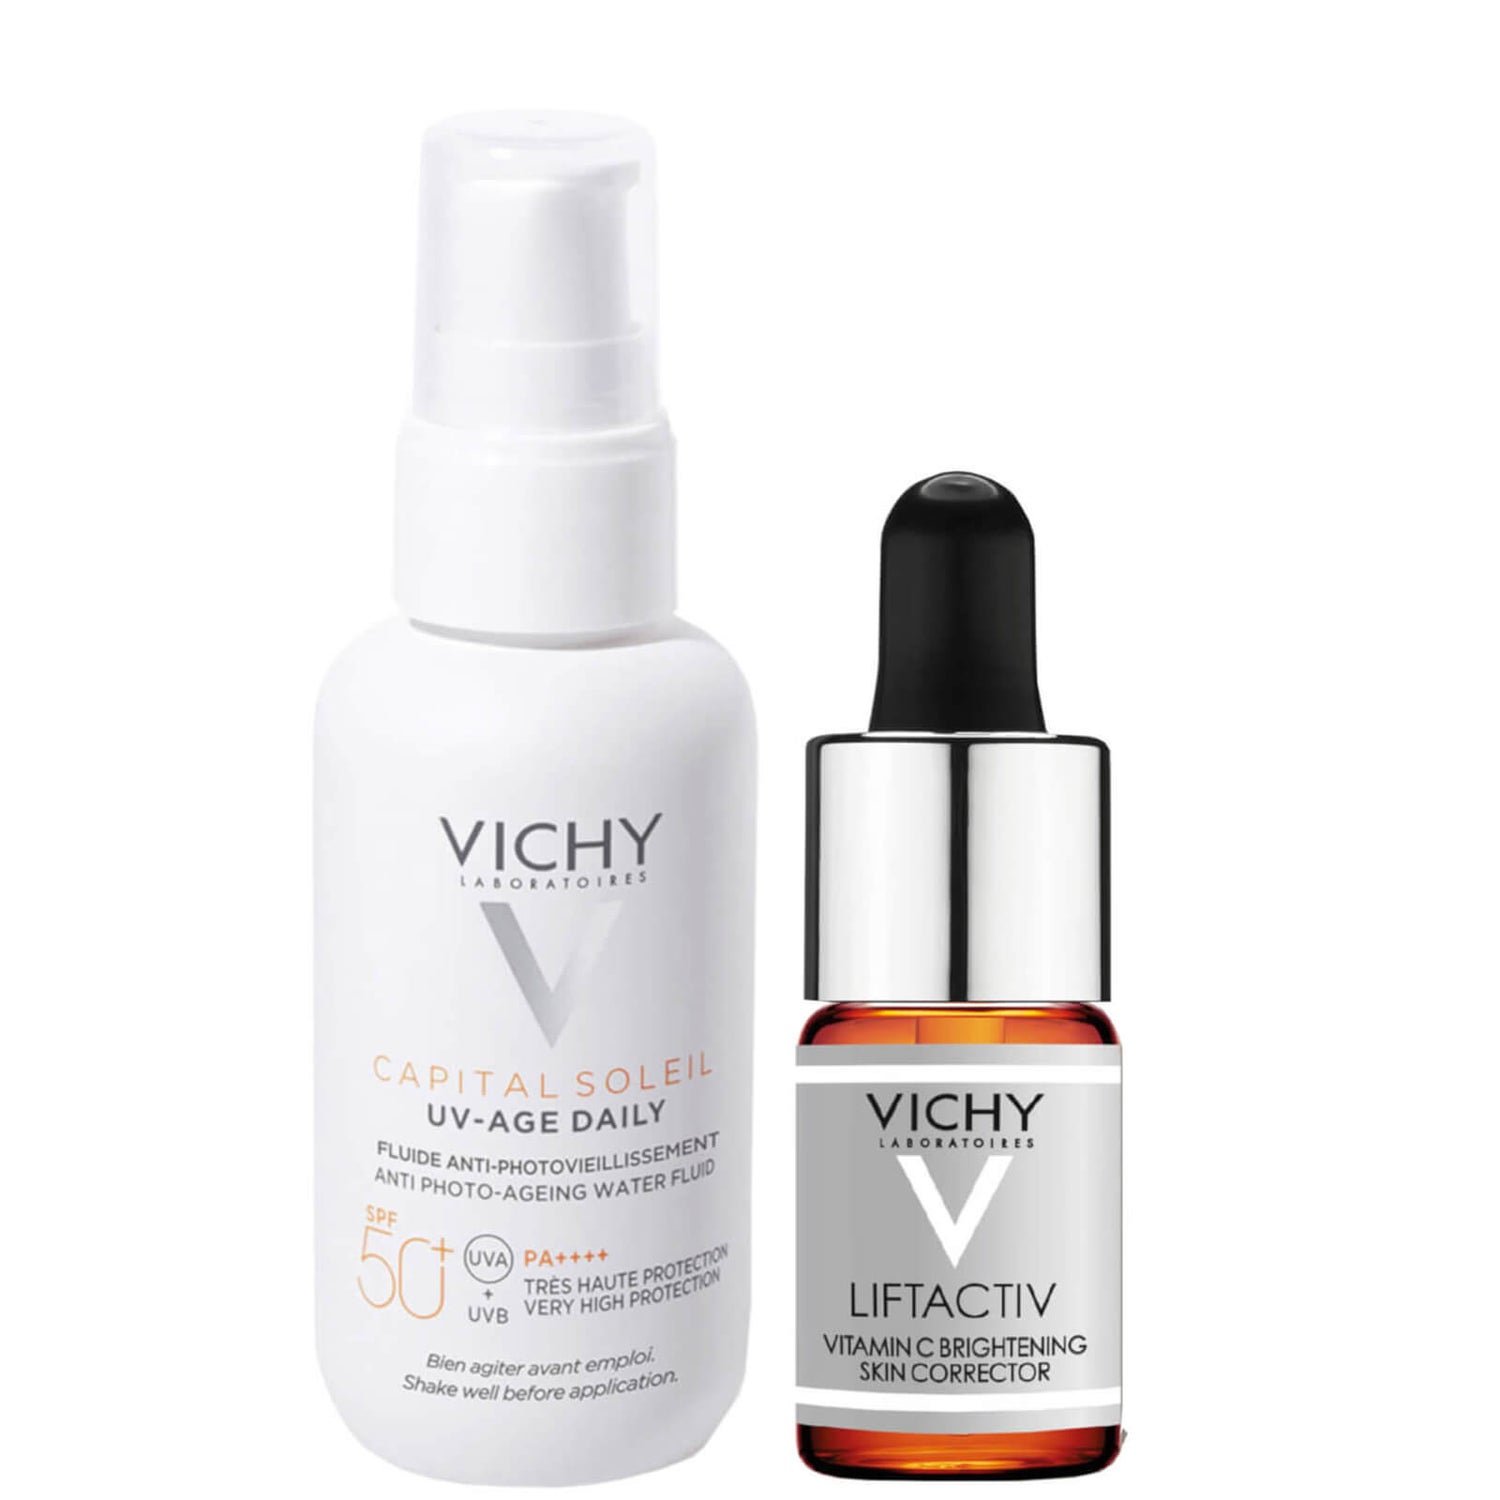 Vichy Brighten and Protect Vitamin C Duo